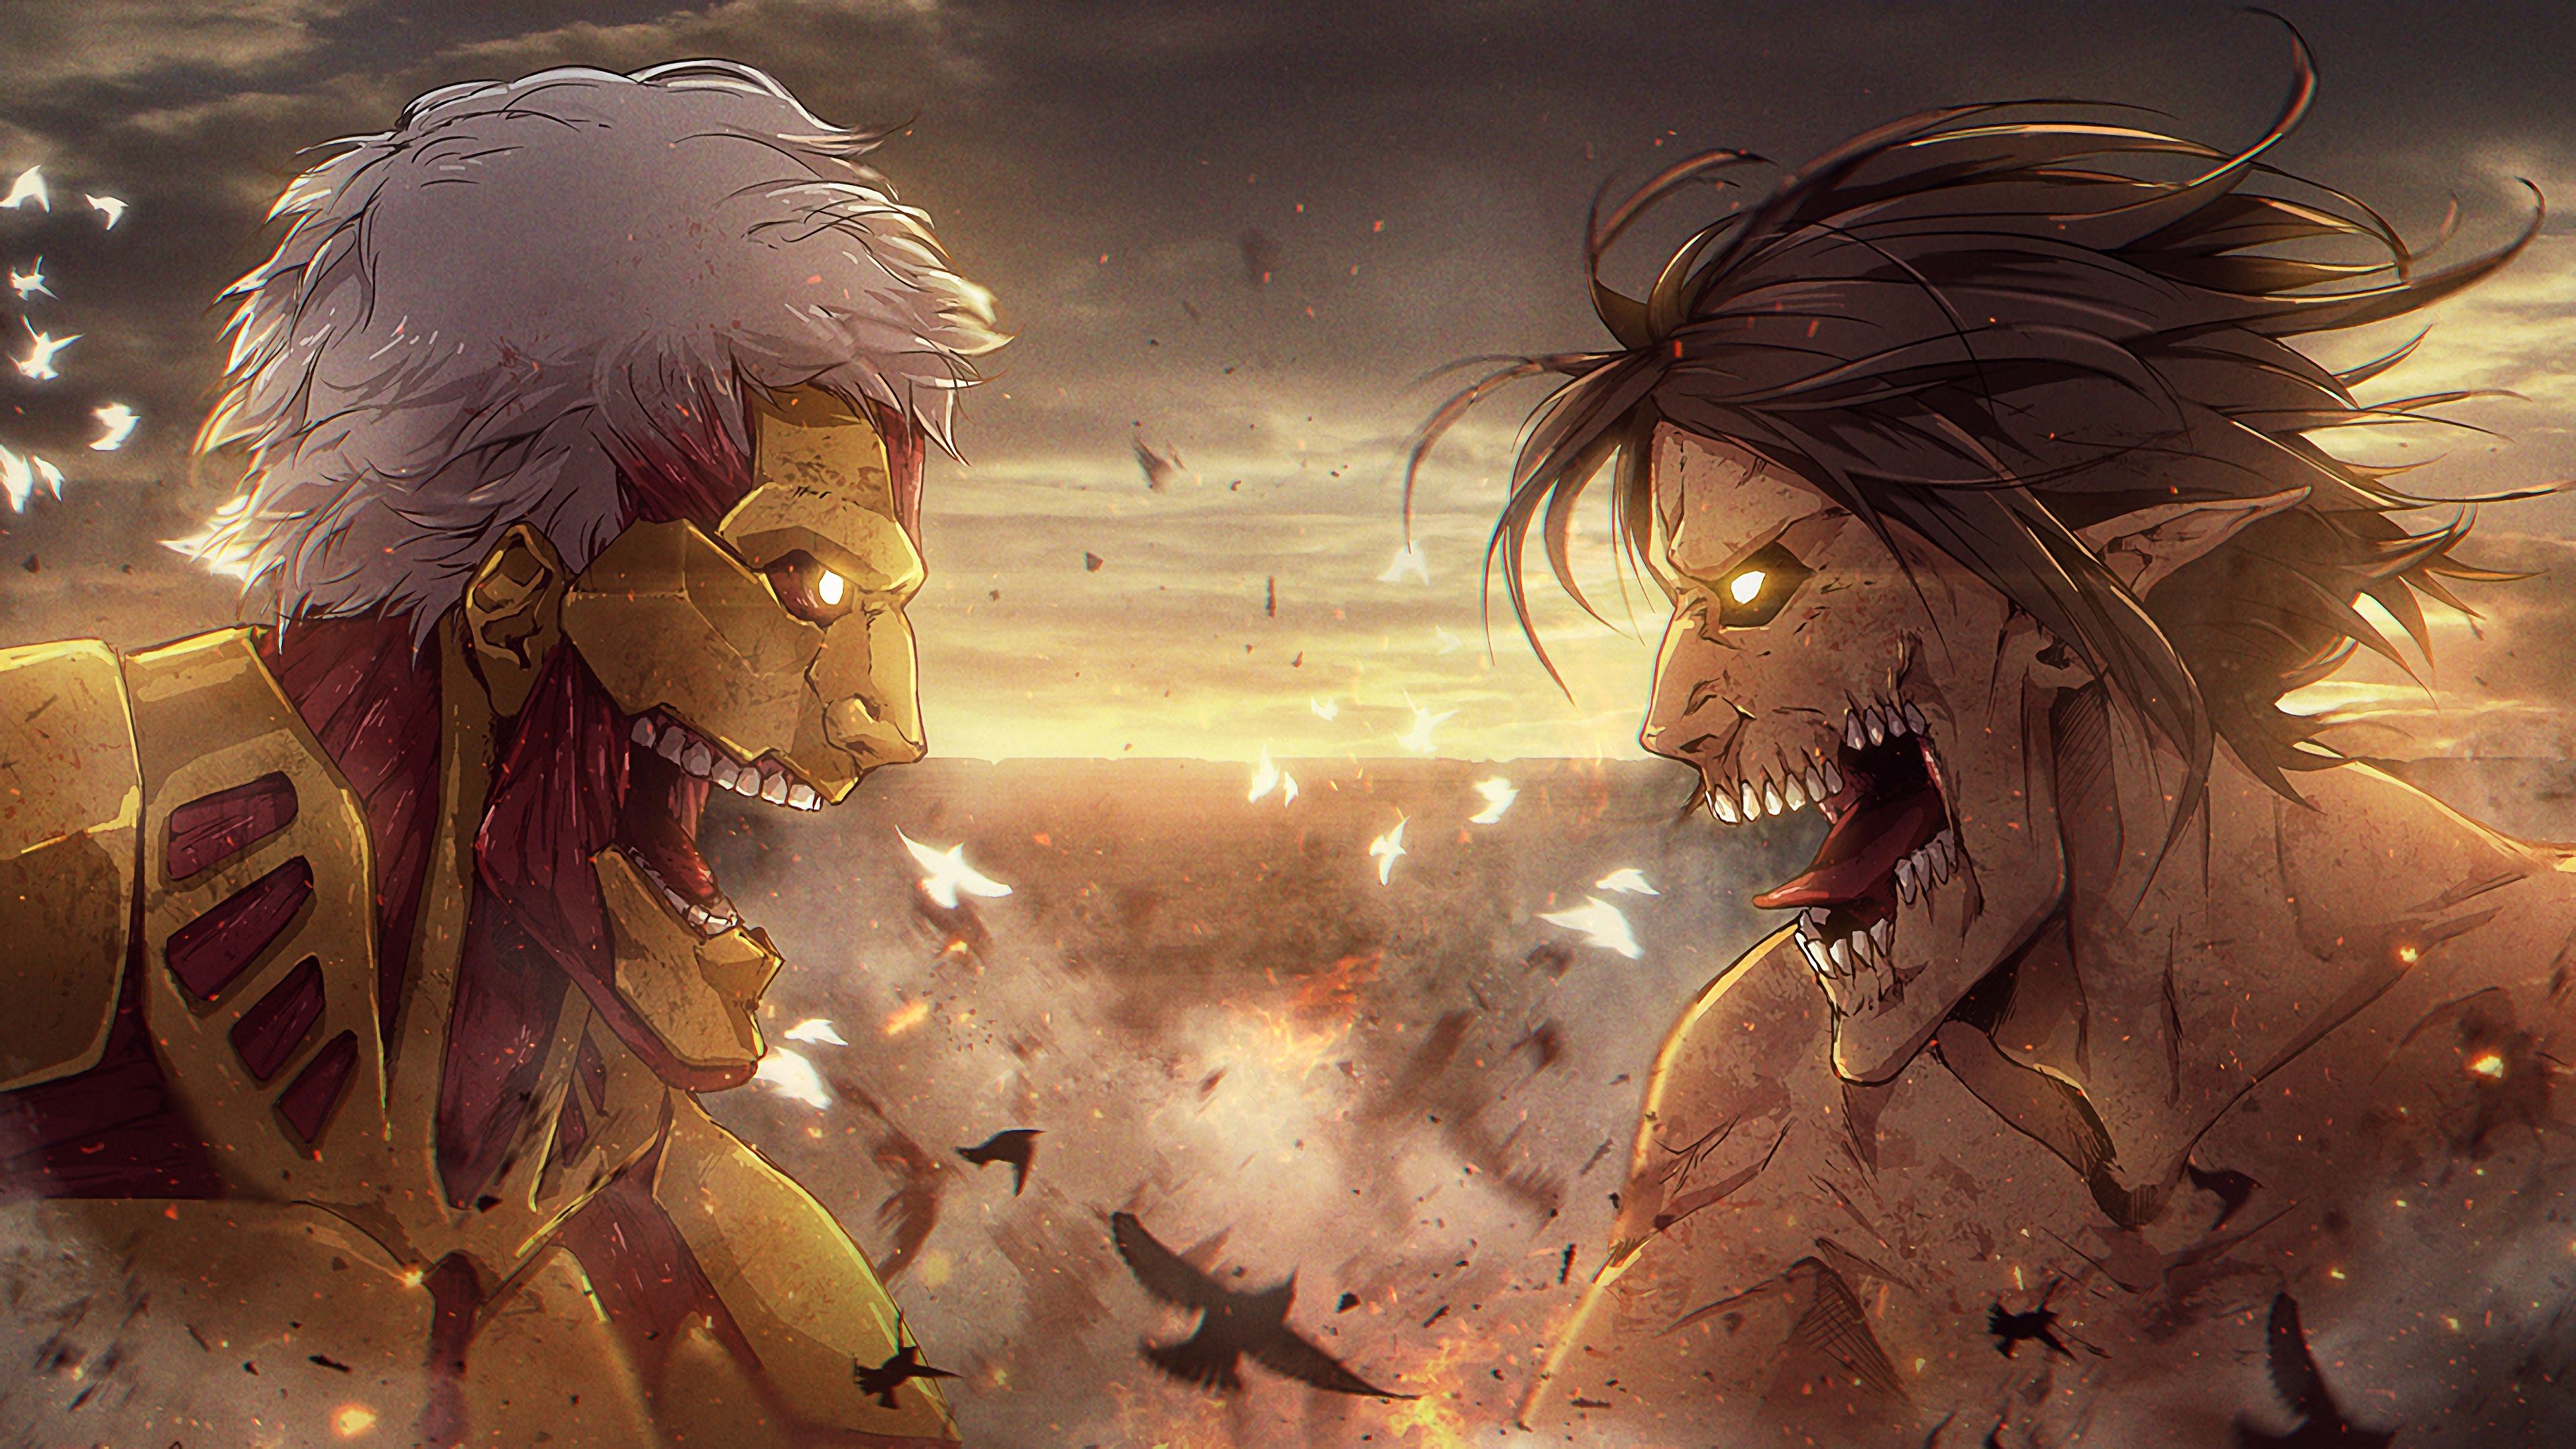 Attack on Titan Final Season Anime Characters Wallpaper 4K #7.3182